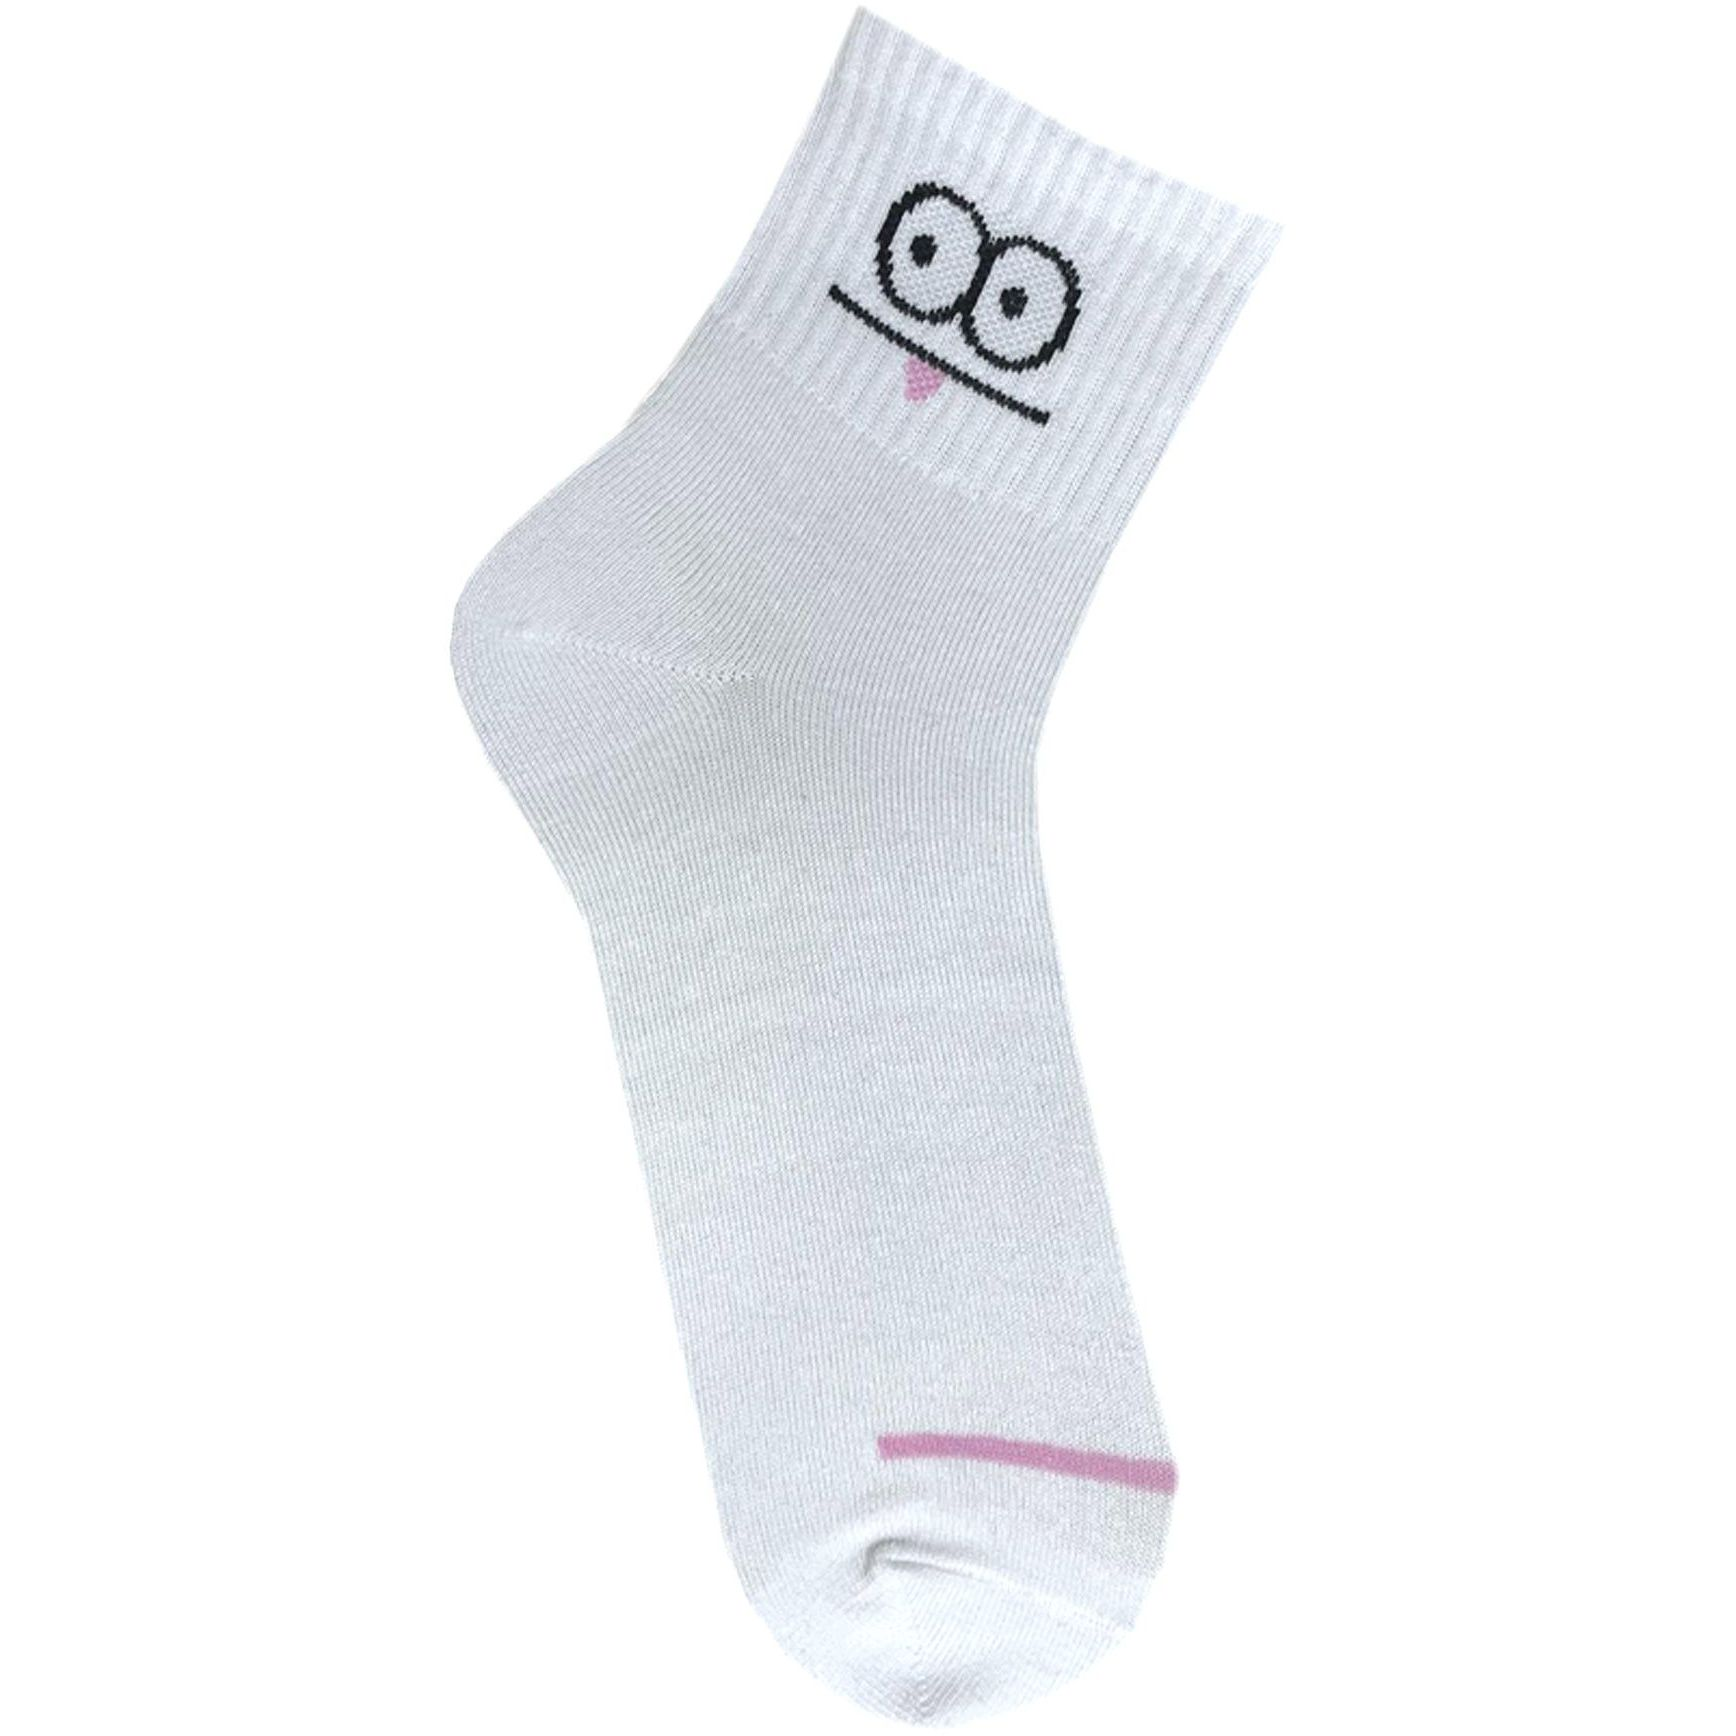 Носки женские Premier Socks 36-40 1 пара белые с принтом Смайл (4820163319056) фото 1